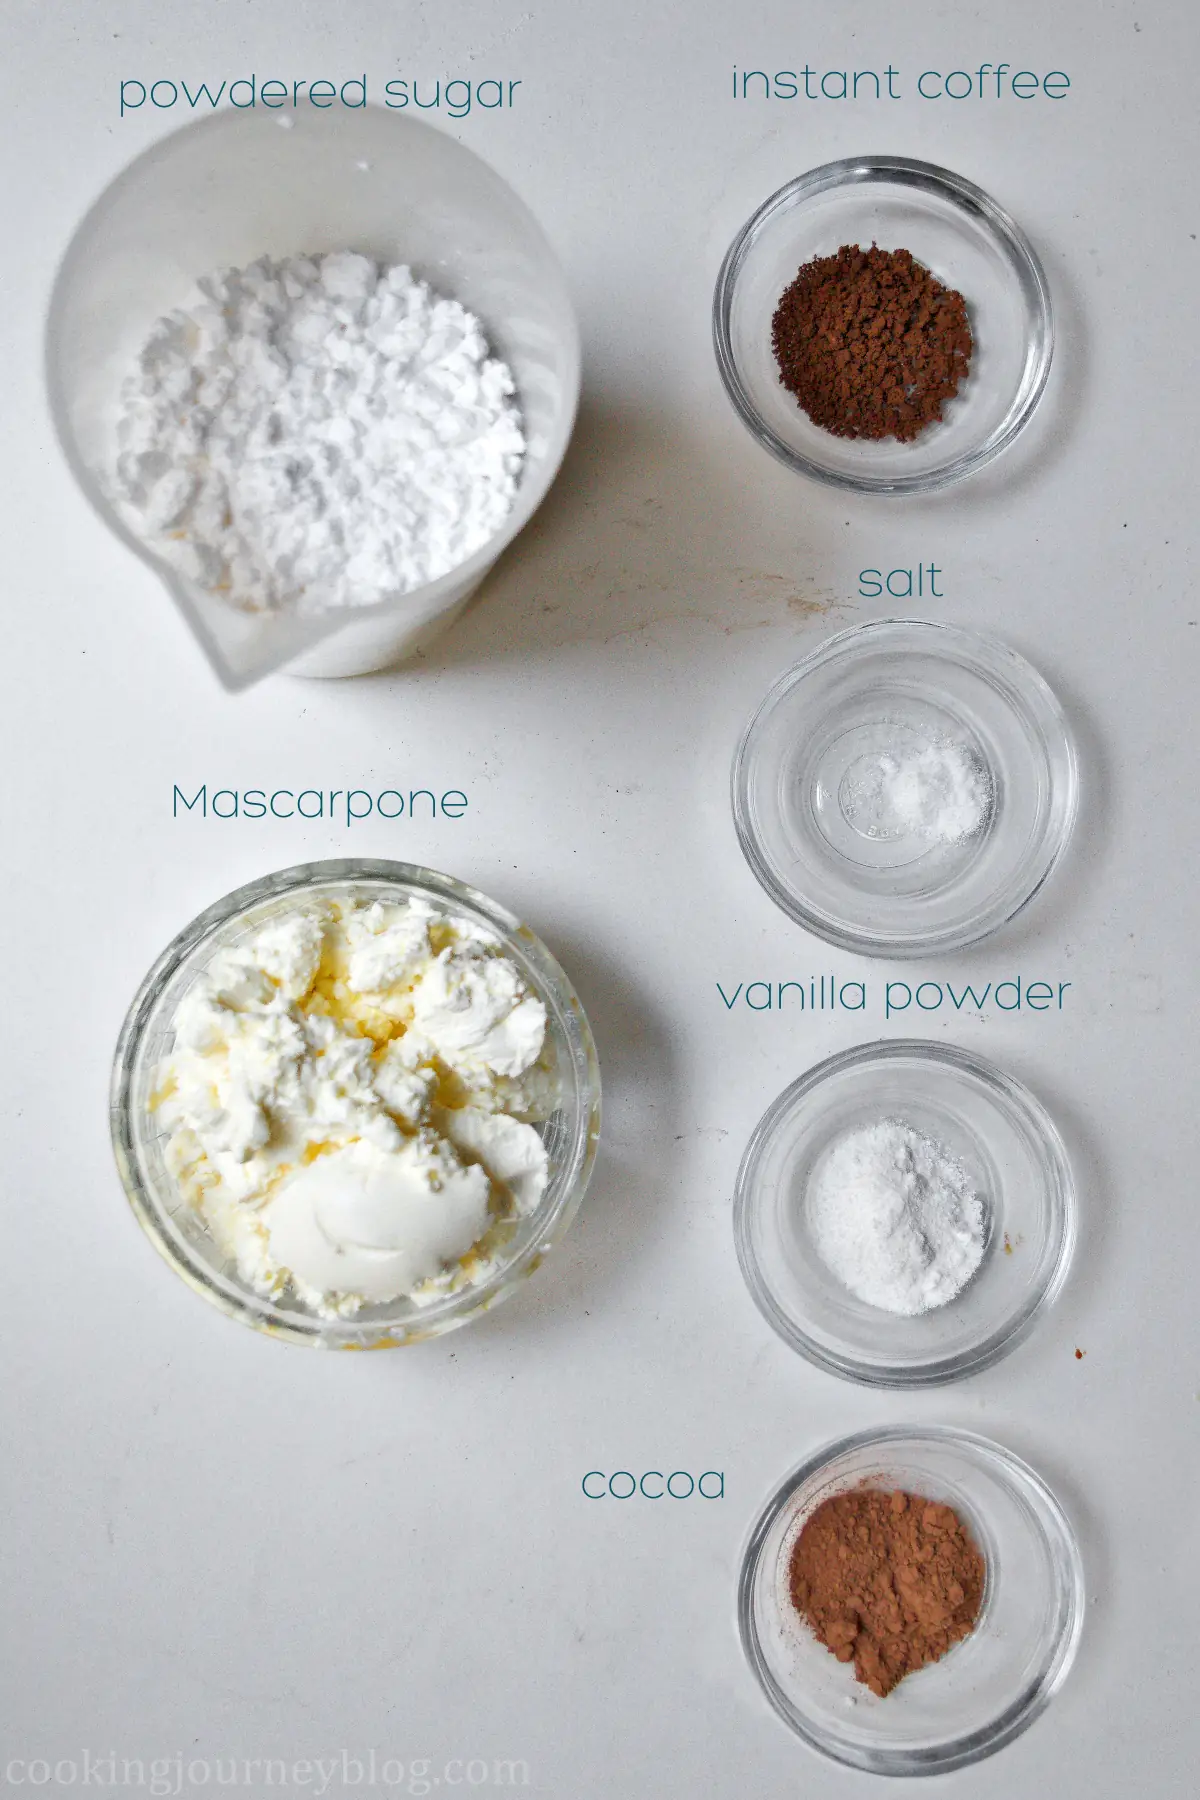 Tiramisu filling ingredients - powdered sugar Mascarpone cheese, granulated coffee, salt, vanilla powder and cacao powder.